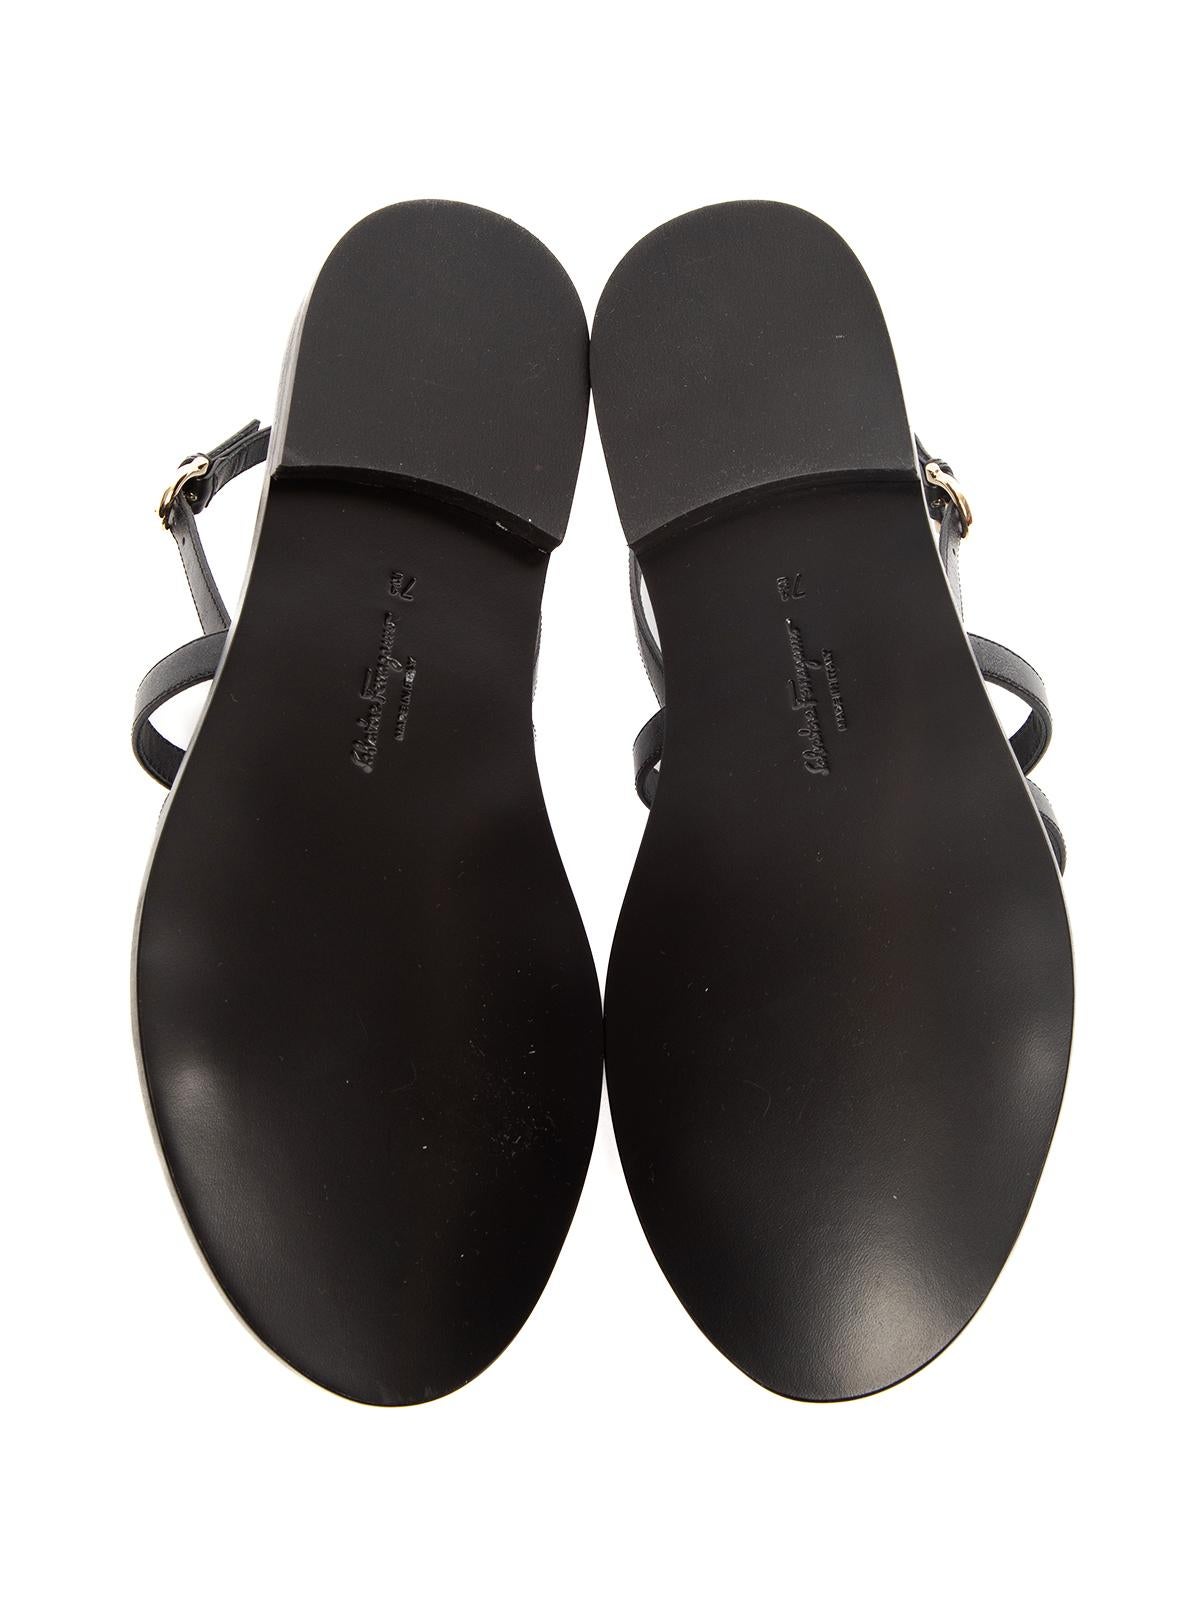 Salvatore Ferragamo Women's Galilee Black Leather Sandals For Sale 1